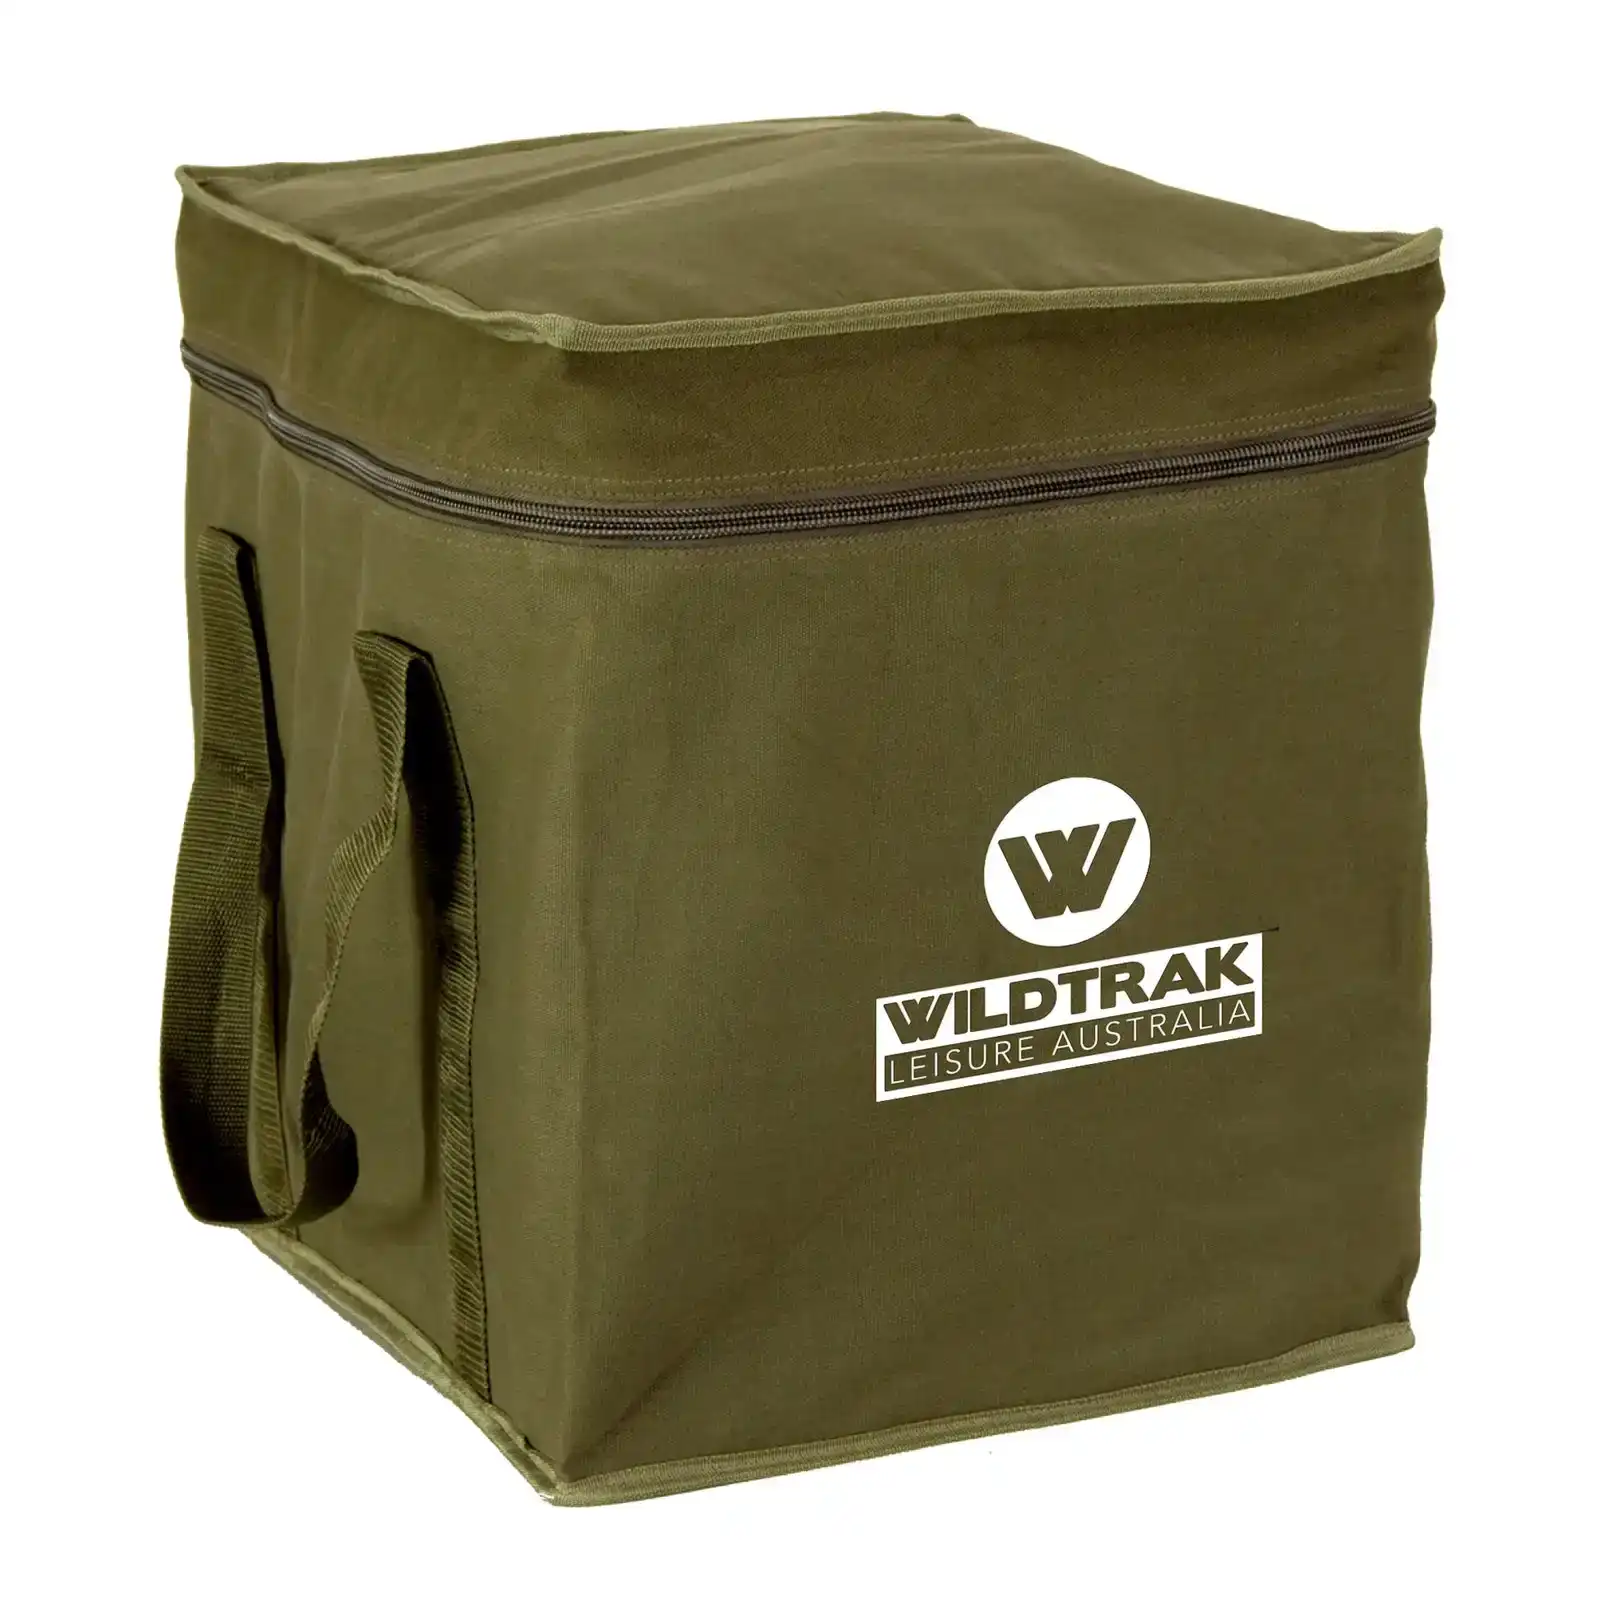 Wildtrak 43cm Cotton Canvas Toilet Bag Outdoor Camping Carry Storage Moss Green